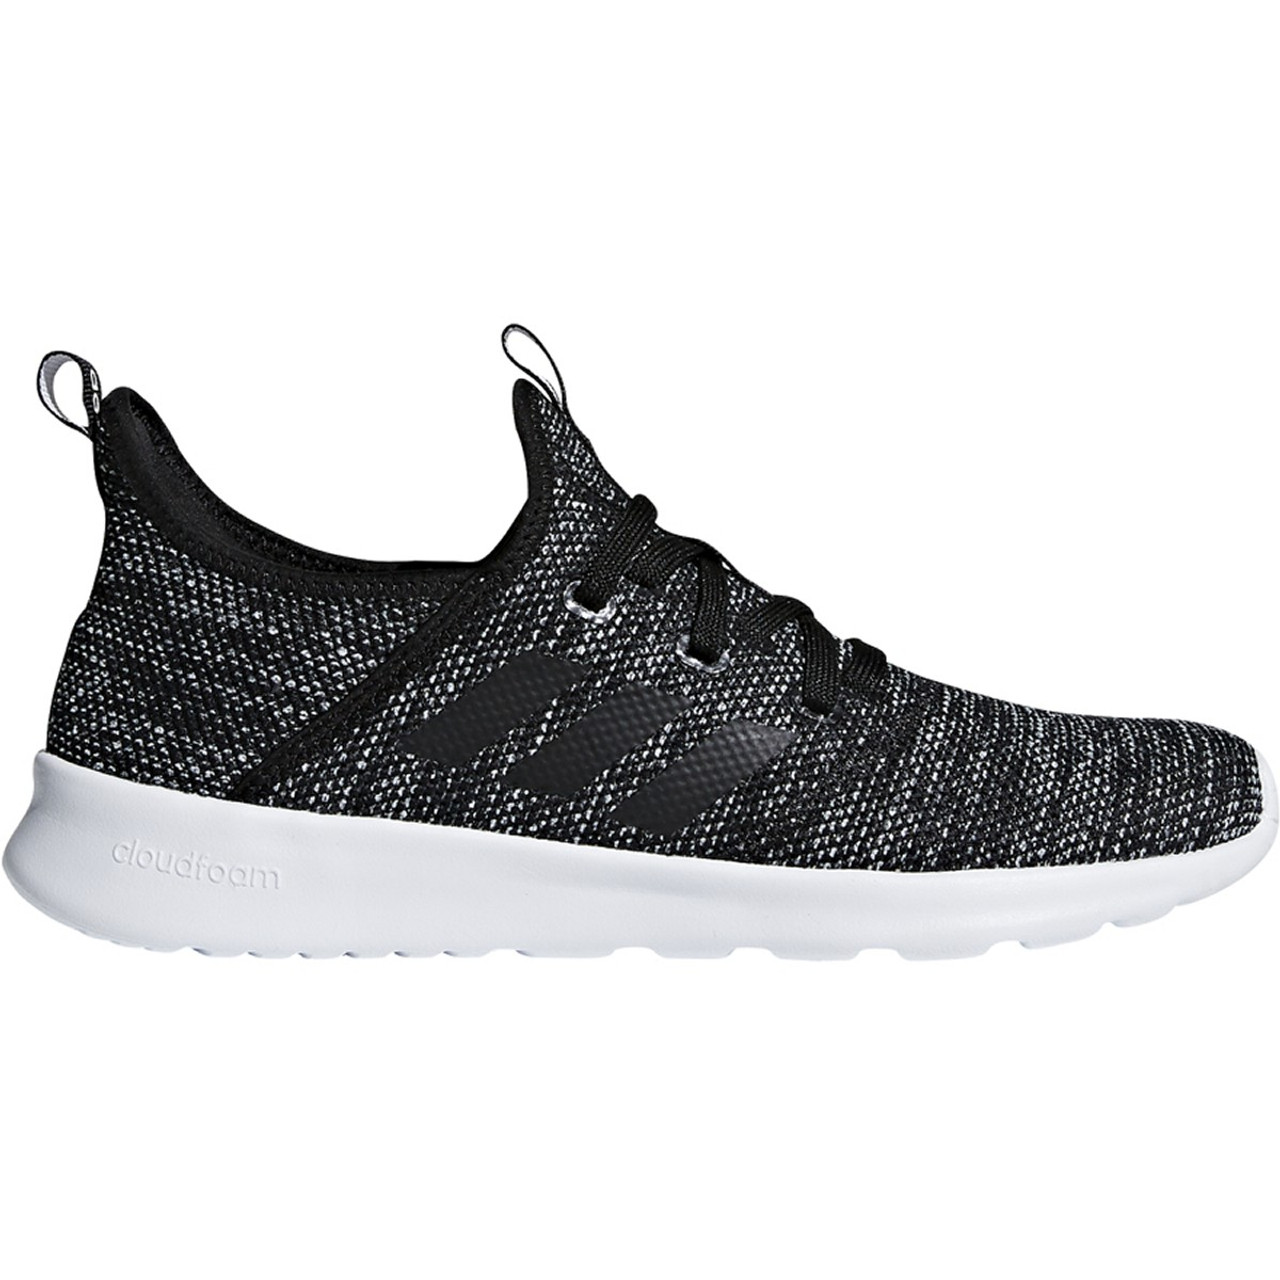 Adidas Cloudfoam Pure Women's Running Sneakers DB0694 - Black, White